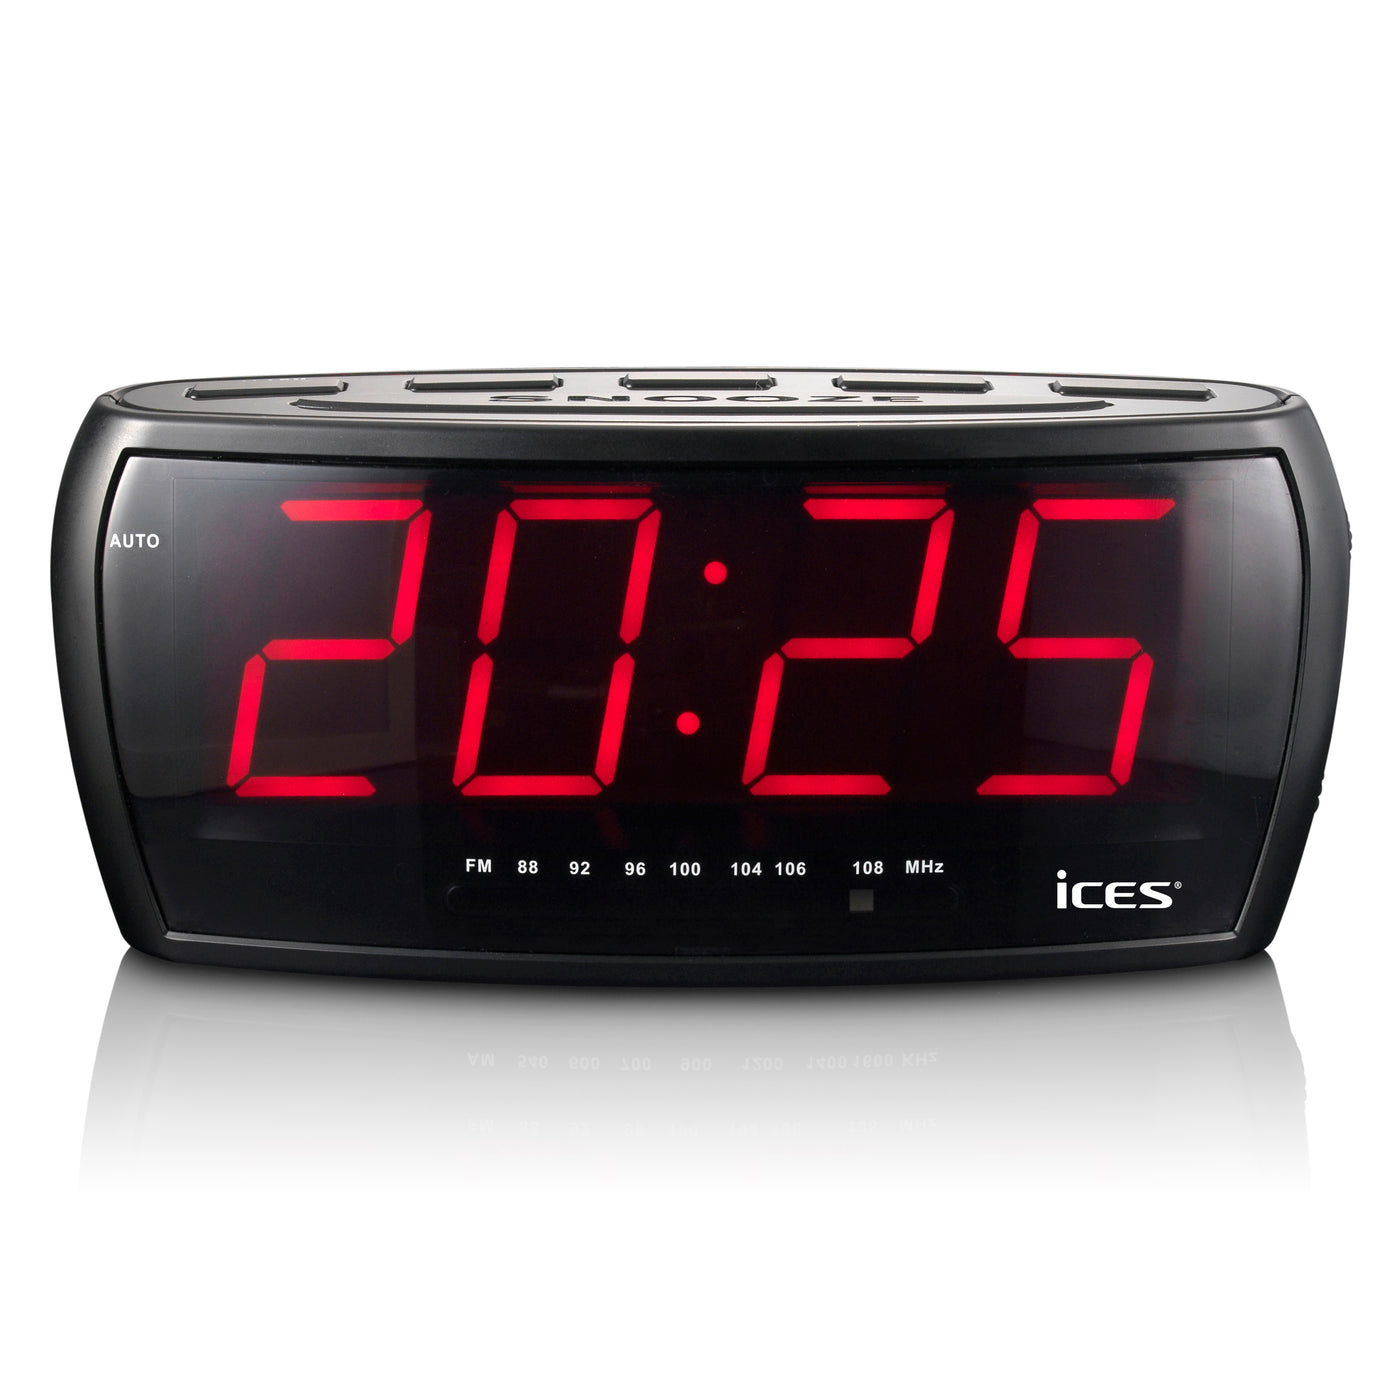 Ices ICR-230-1 - FM clock radio, display 1,8" - Black